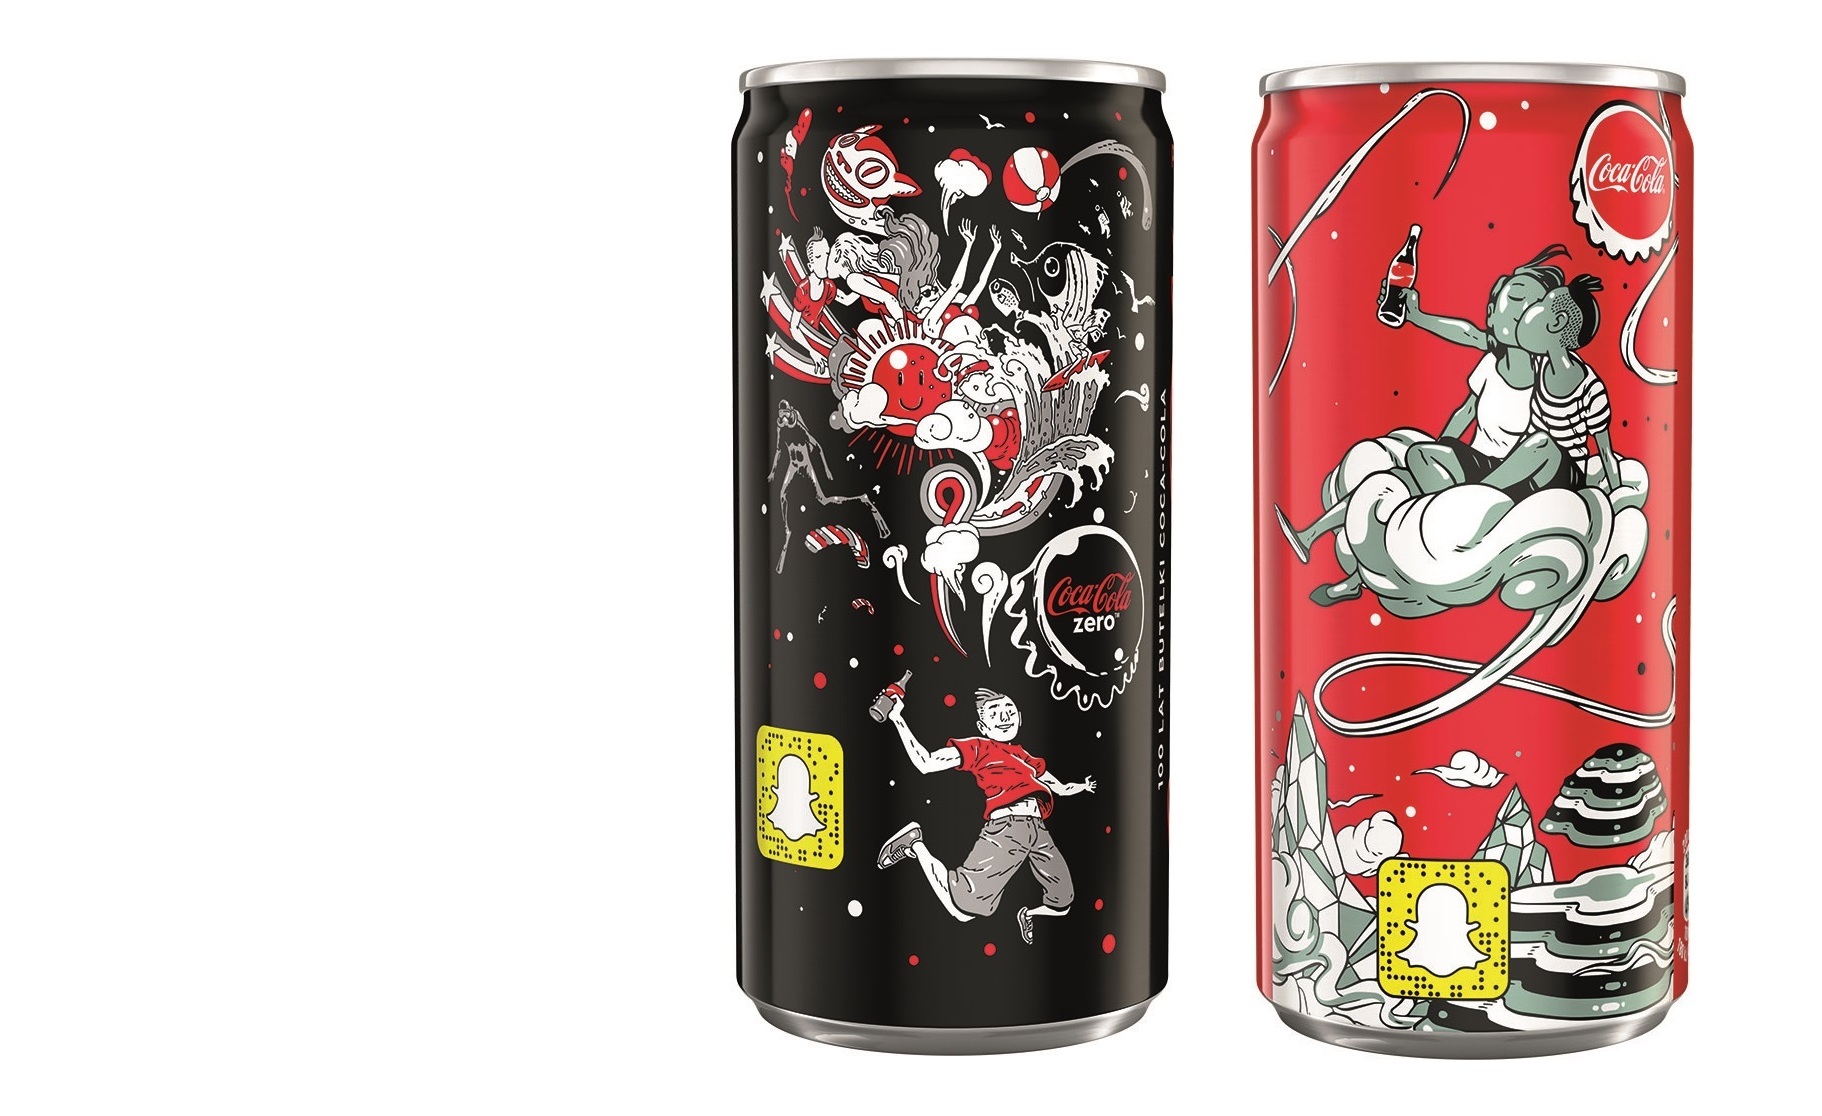 Artystyczne puszki Coca-Cola Inspiracje Packshot Coca Cola Zero 200 ml CAN Closed Clear Mural 3D rendered 1969 2015 Jul 27 1